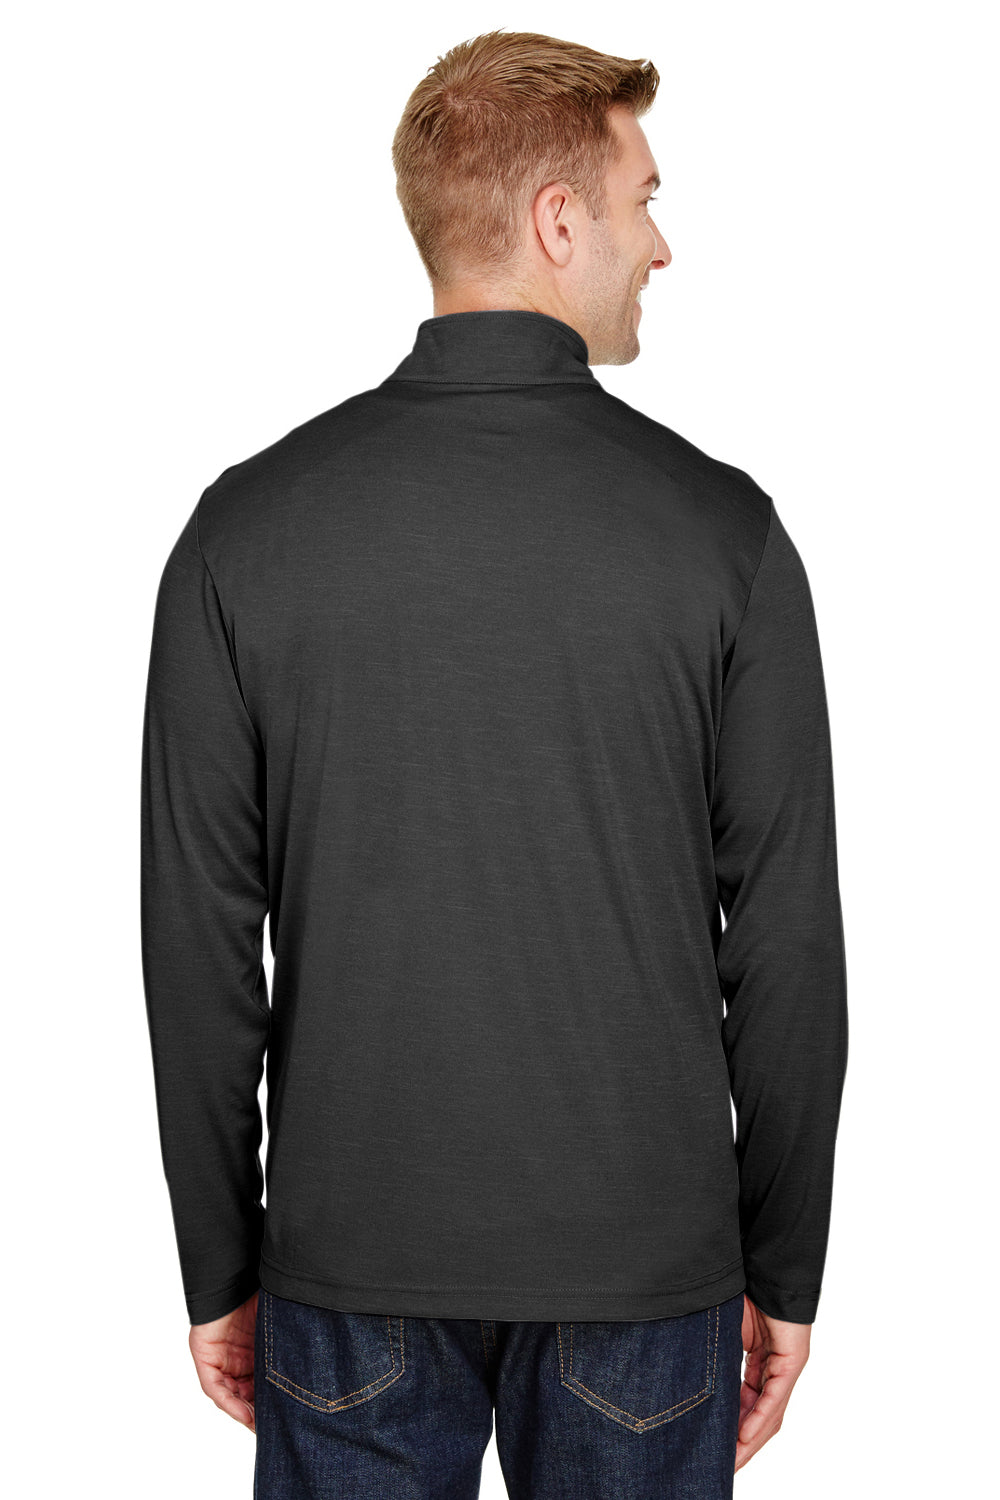 Team 365 TT31H Mens Zone Sonic Performance Moisture Wicking 1/4 Zip Sweatshirt Black Back